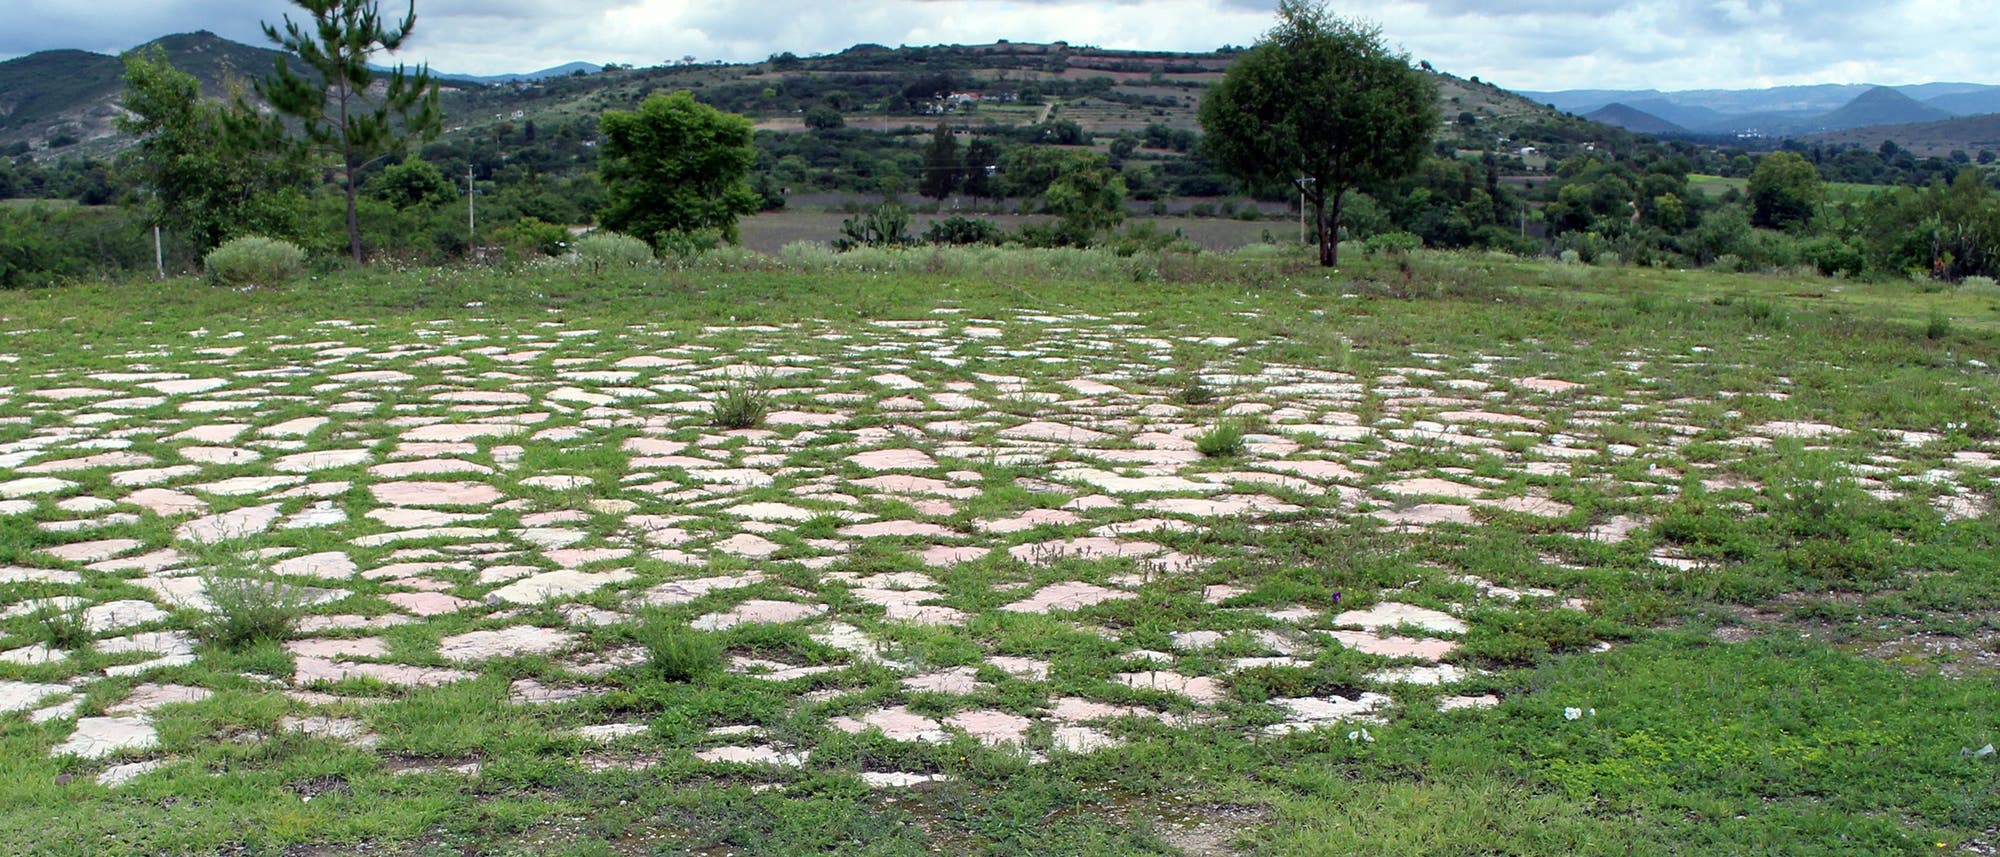 Überreste eines Ballplatzes in Etlatongo, Mexiko